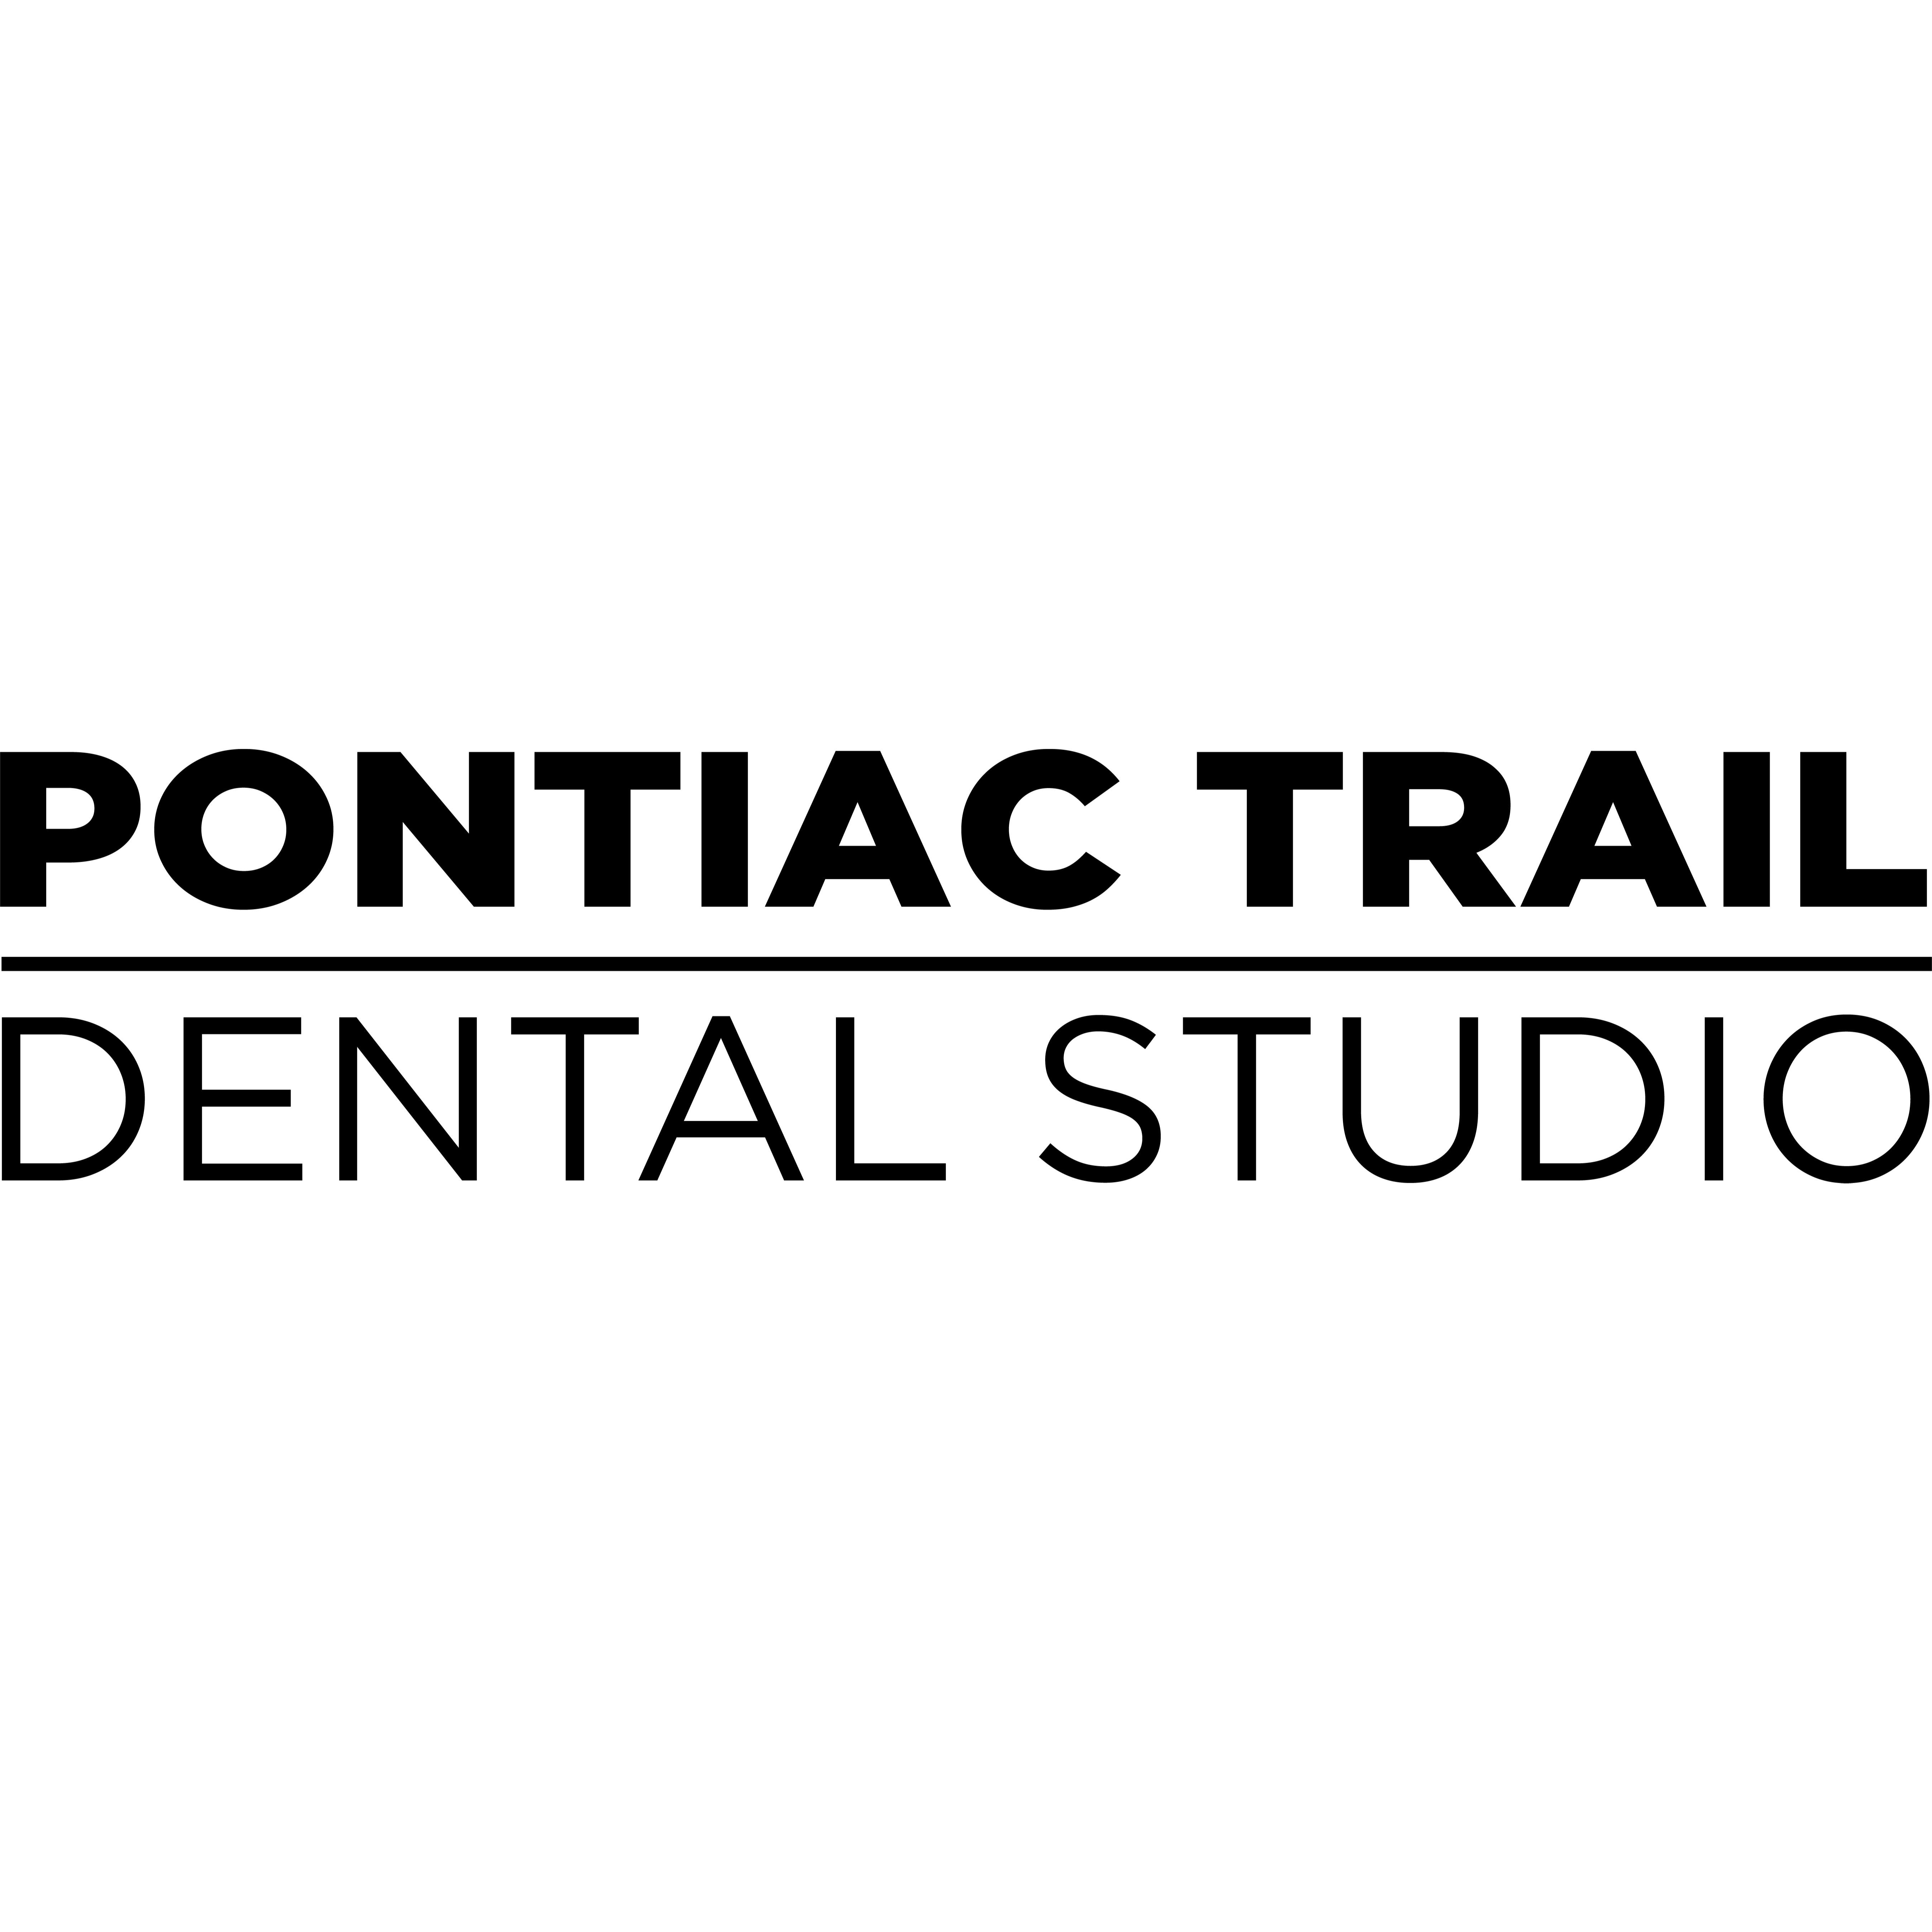 Pontiac Trail Dental Studio